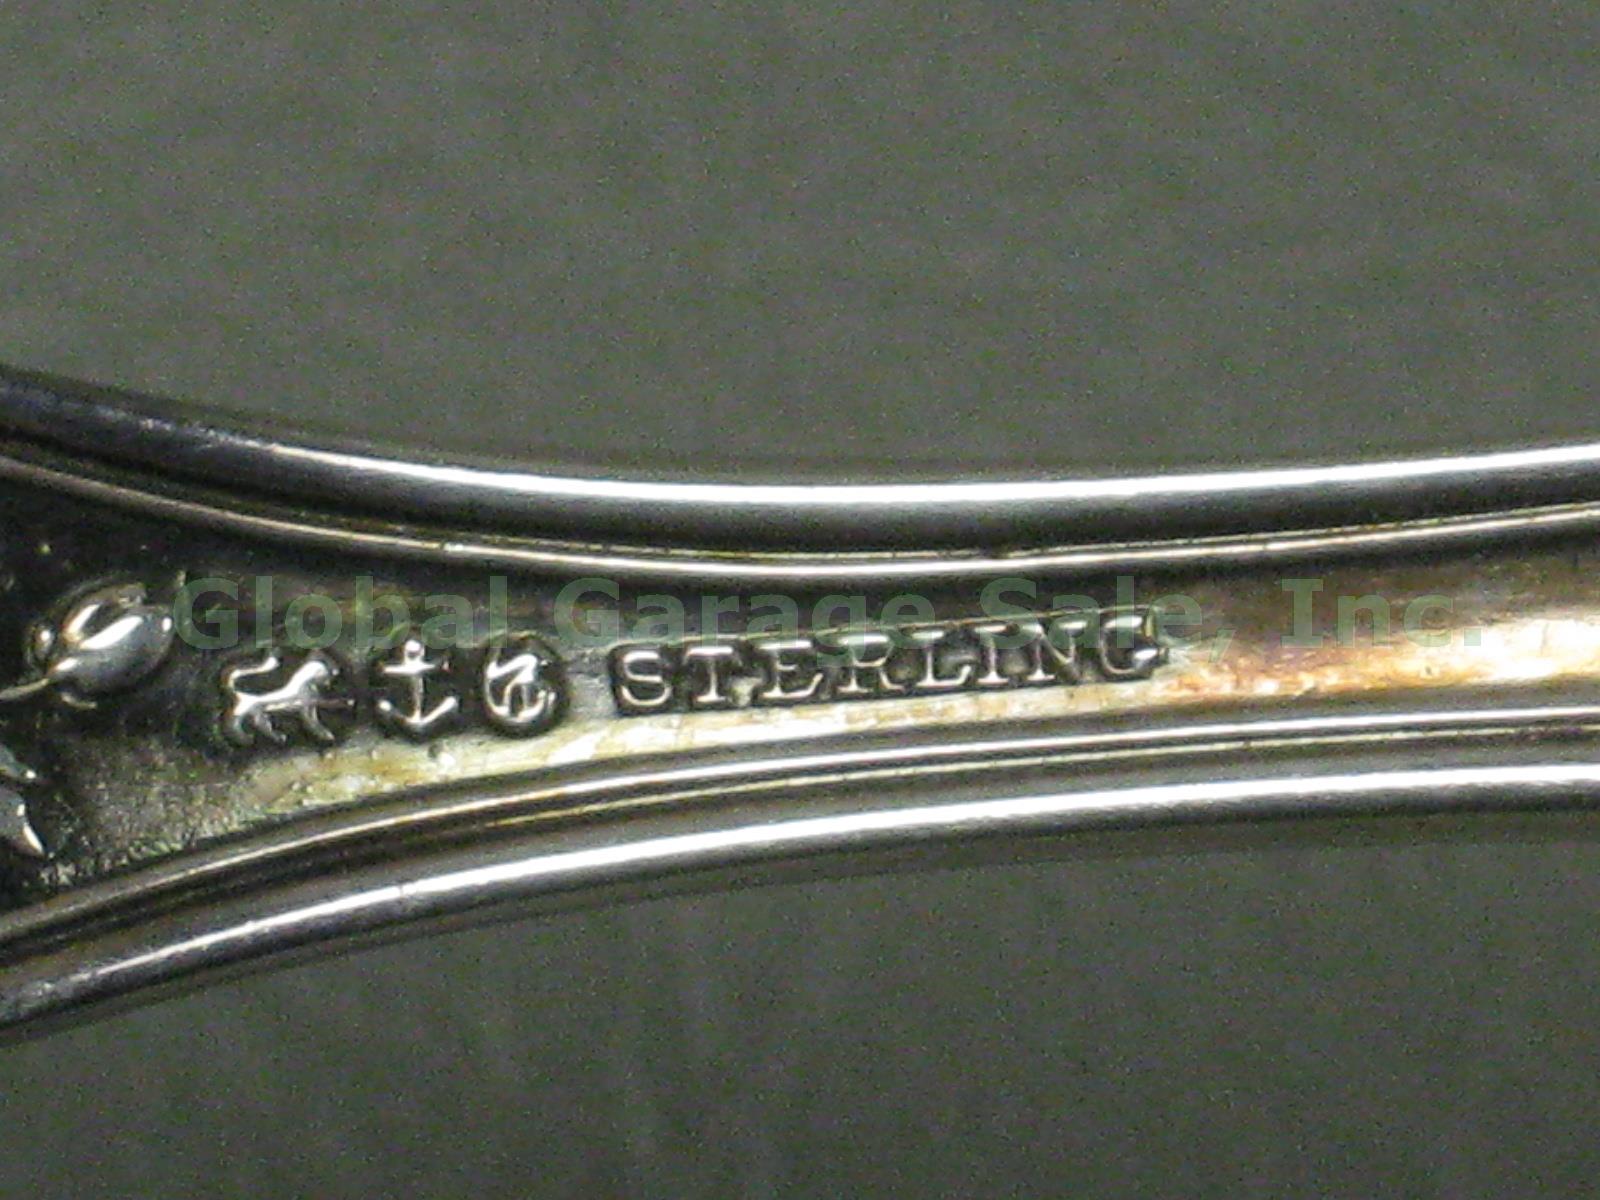 6 Vtg Antique Gorham Buttercup Sterling Silver Teaspoons Set Monogram 162 Grams 3